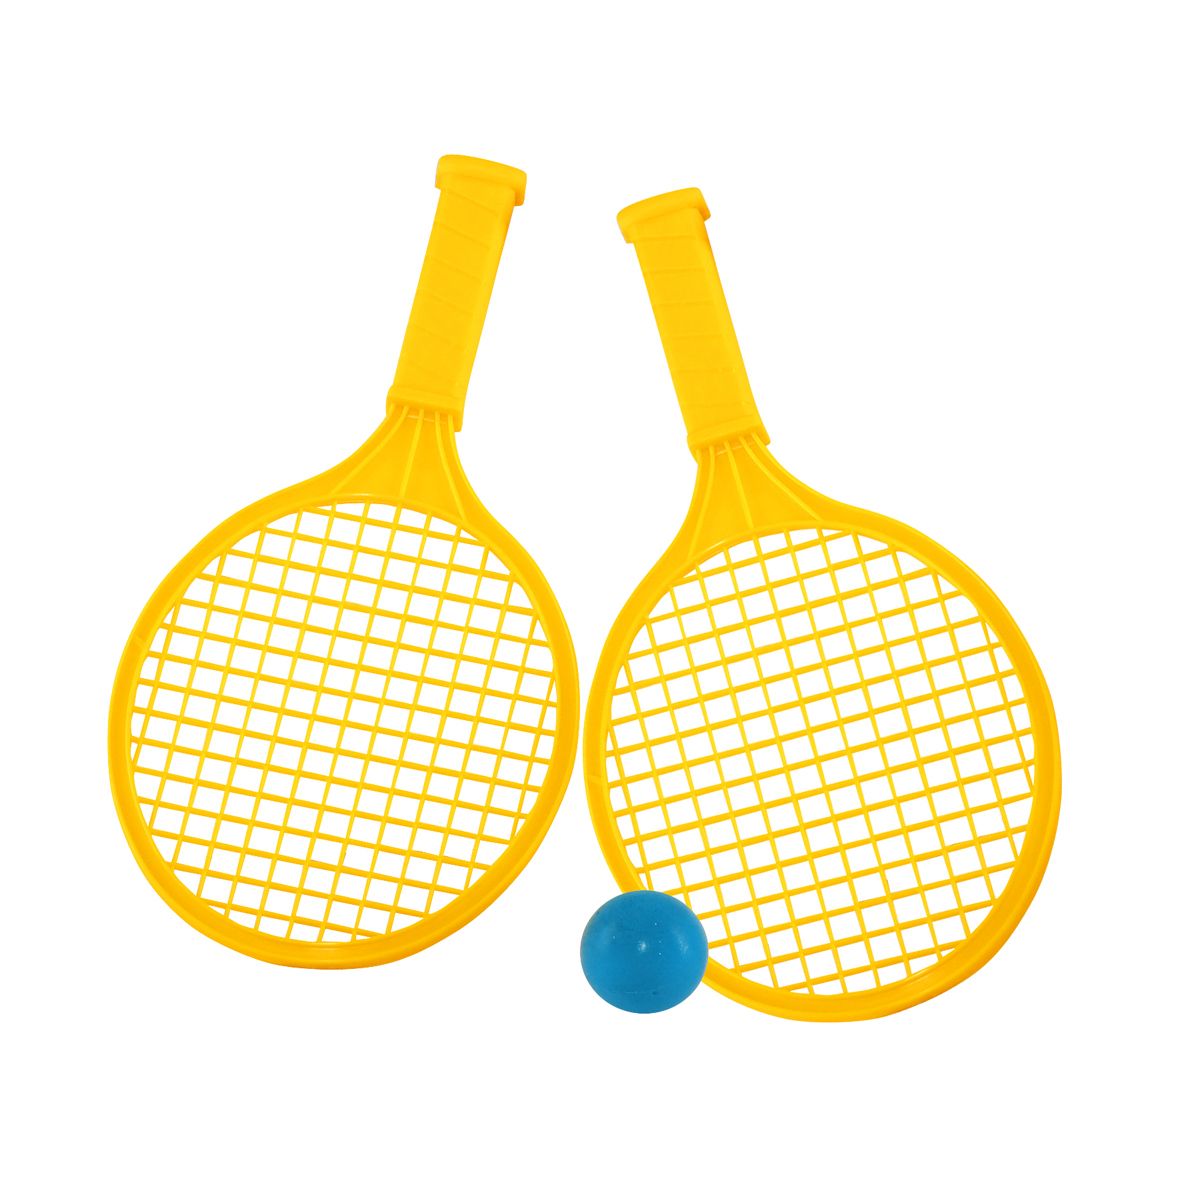 Rakieta do badmintona Bączek/Tupiko (RM 0144)